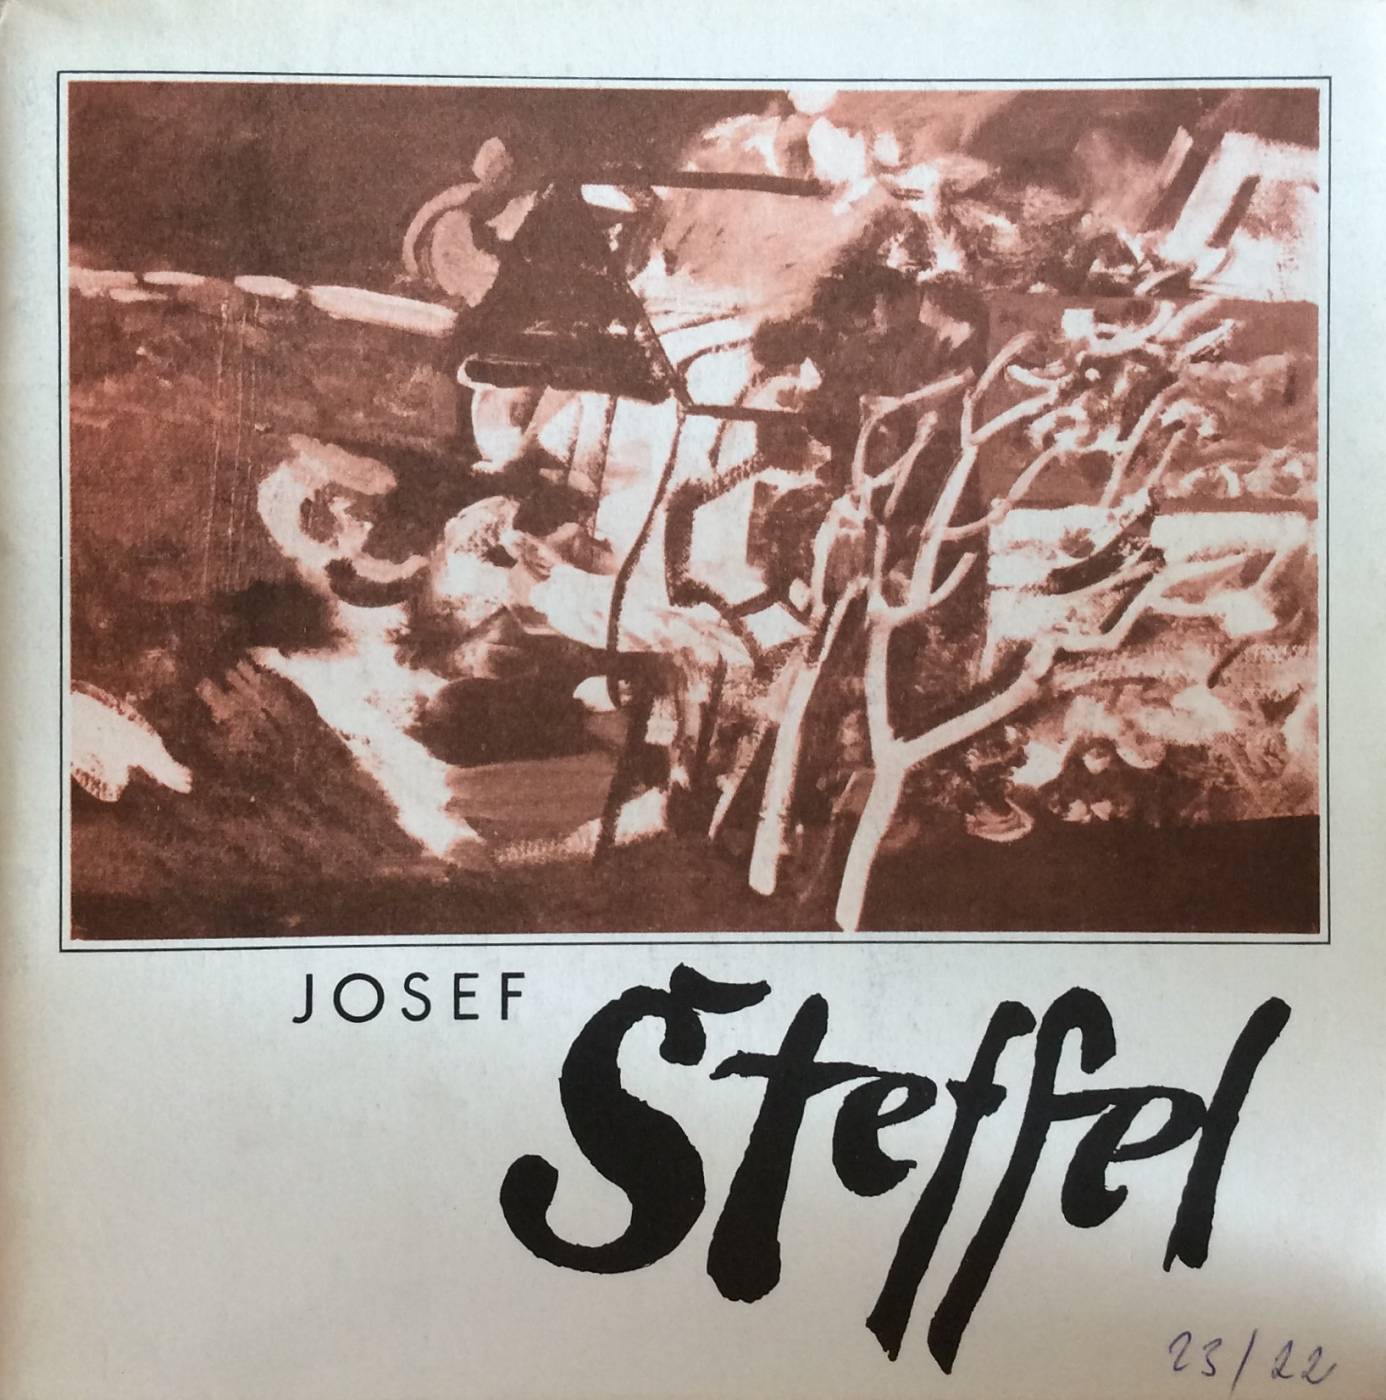 Josef Šteffel